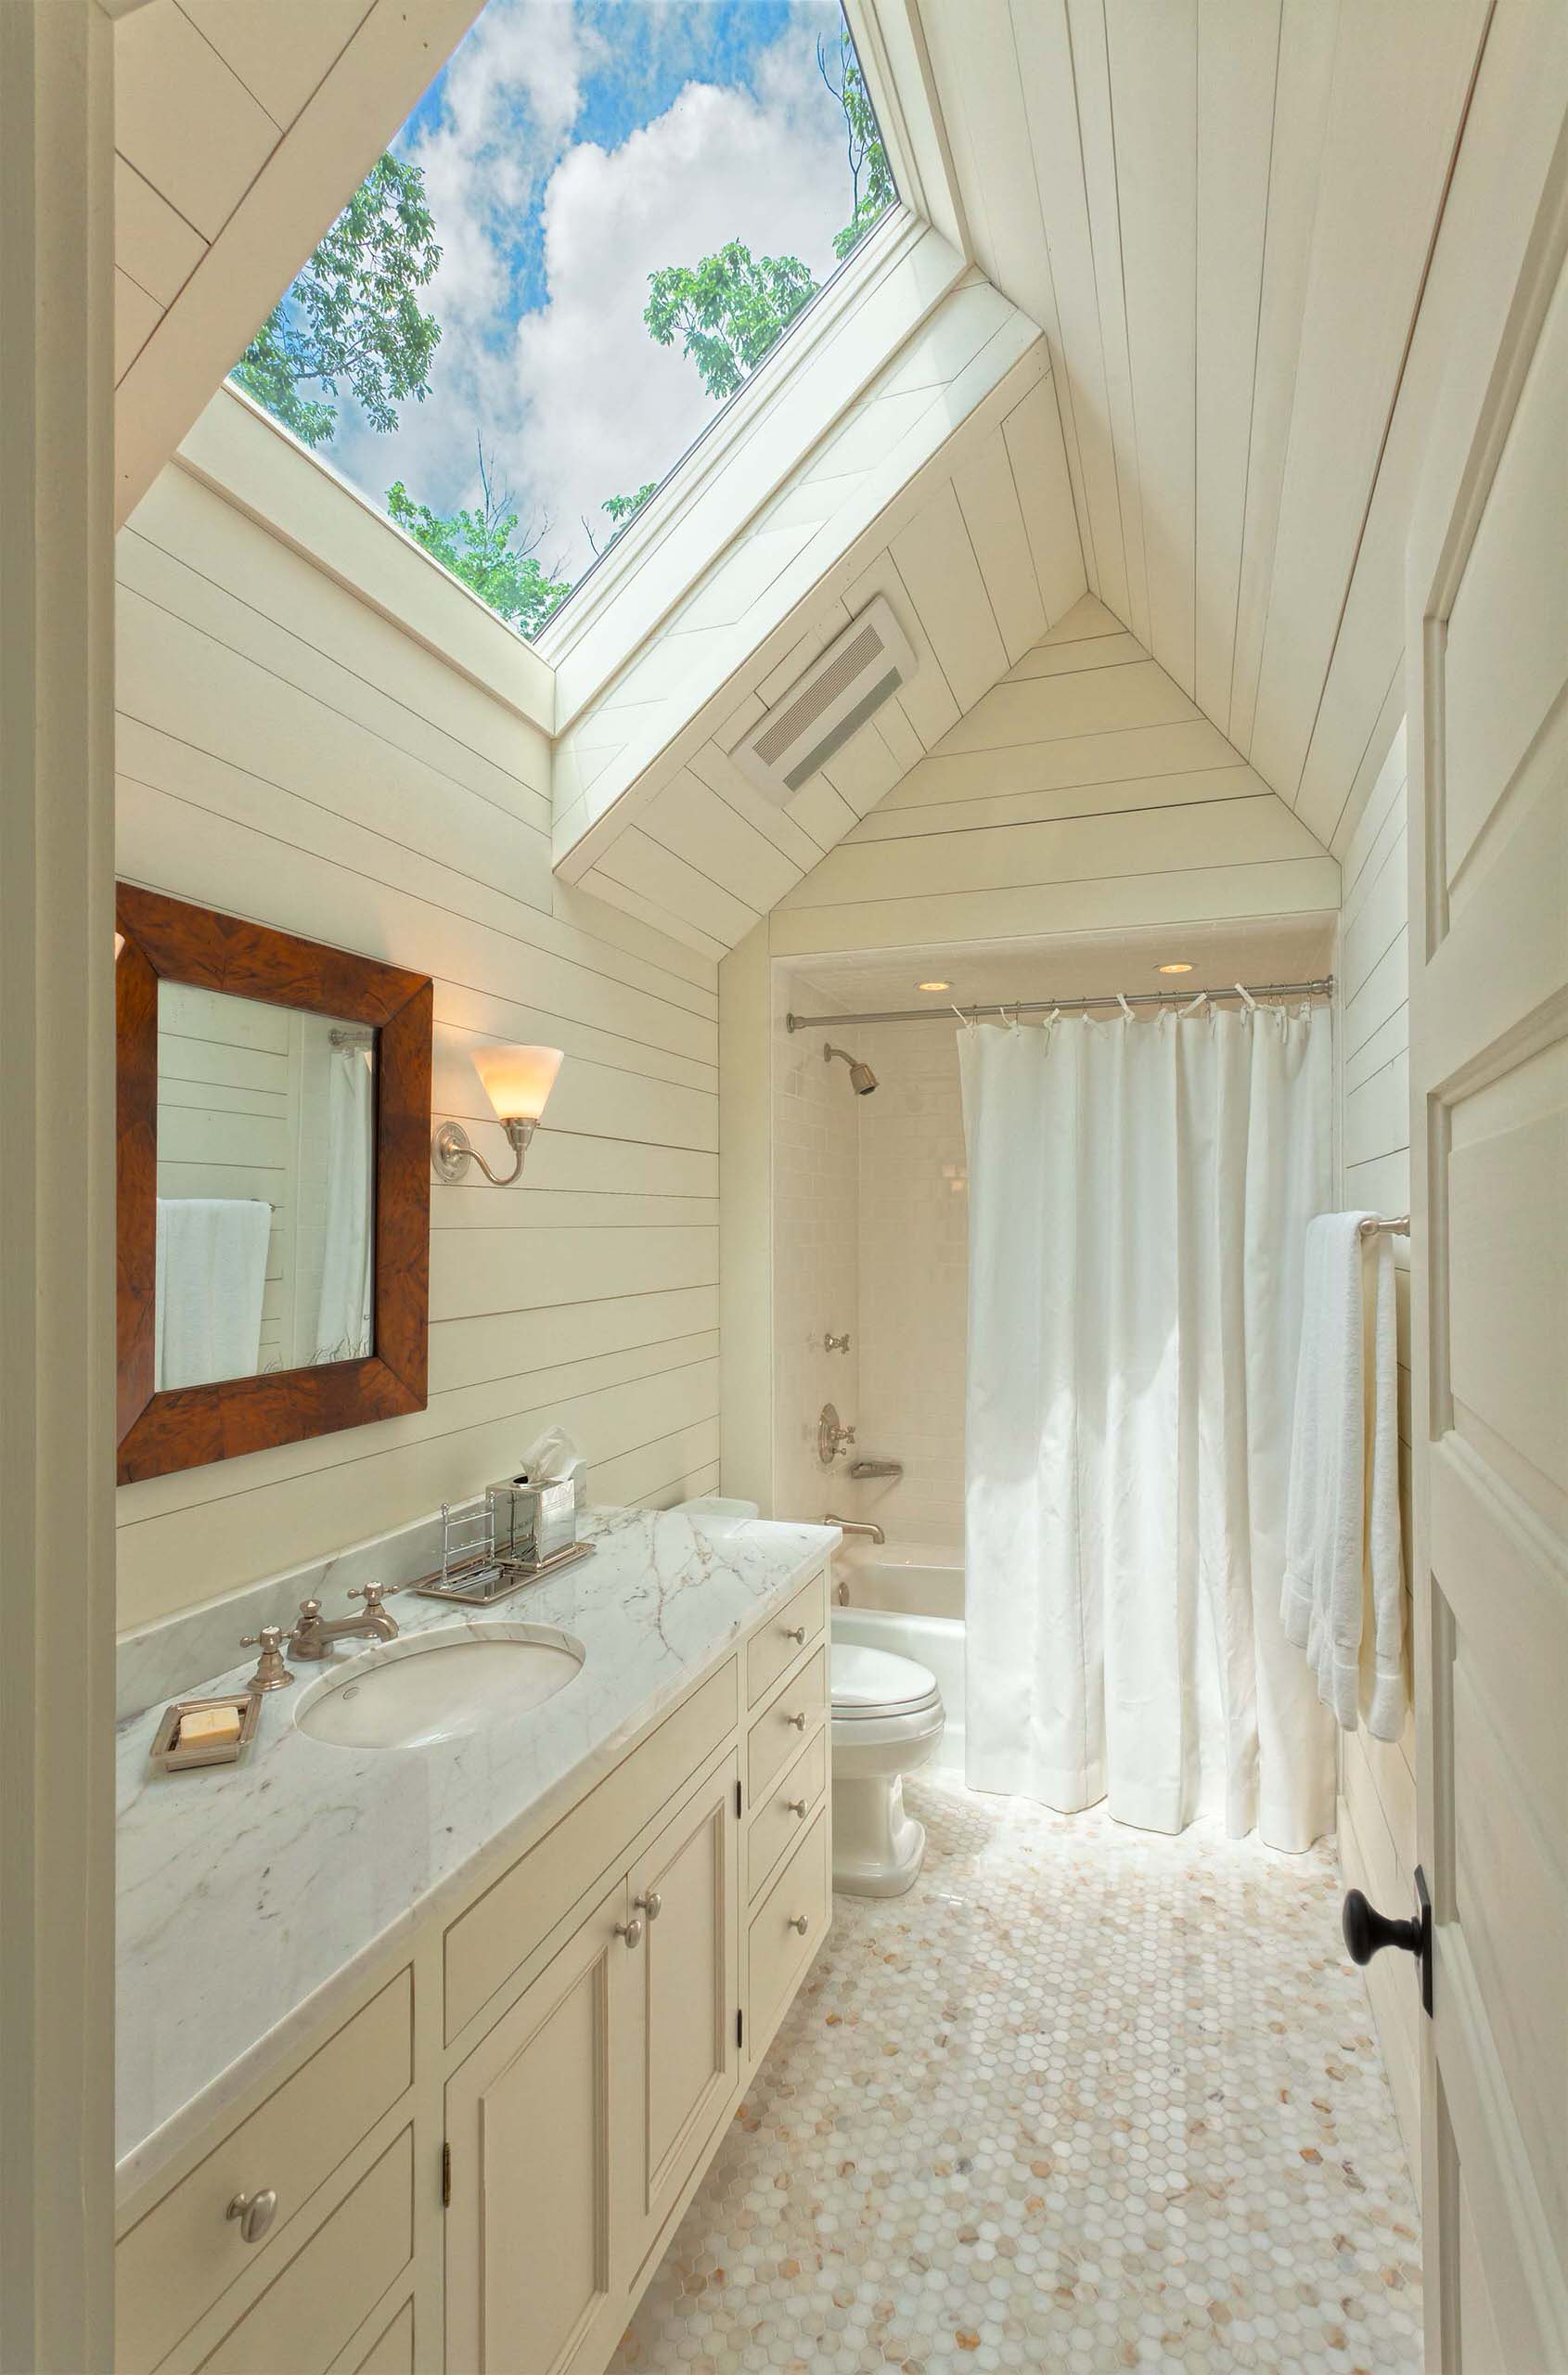 Bathroom with skylight featured as a maximize natural light idea